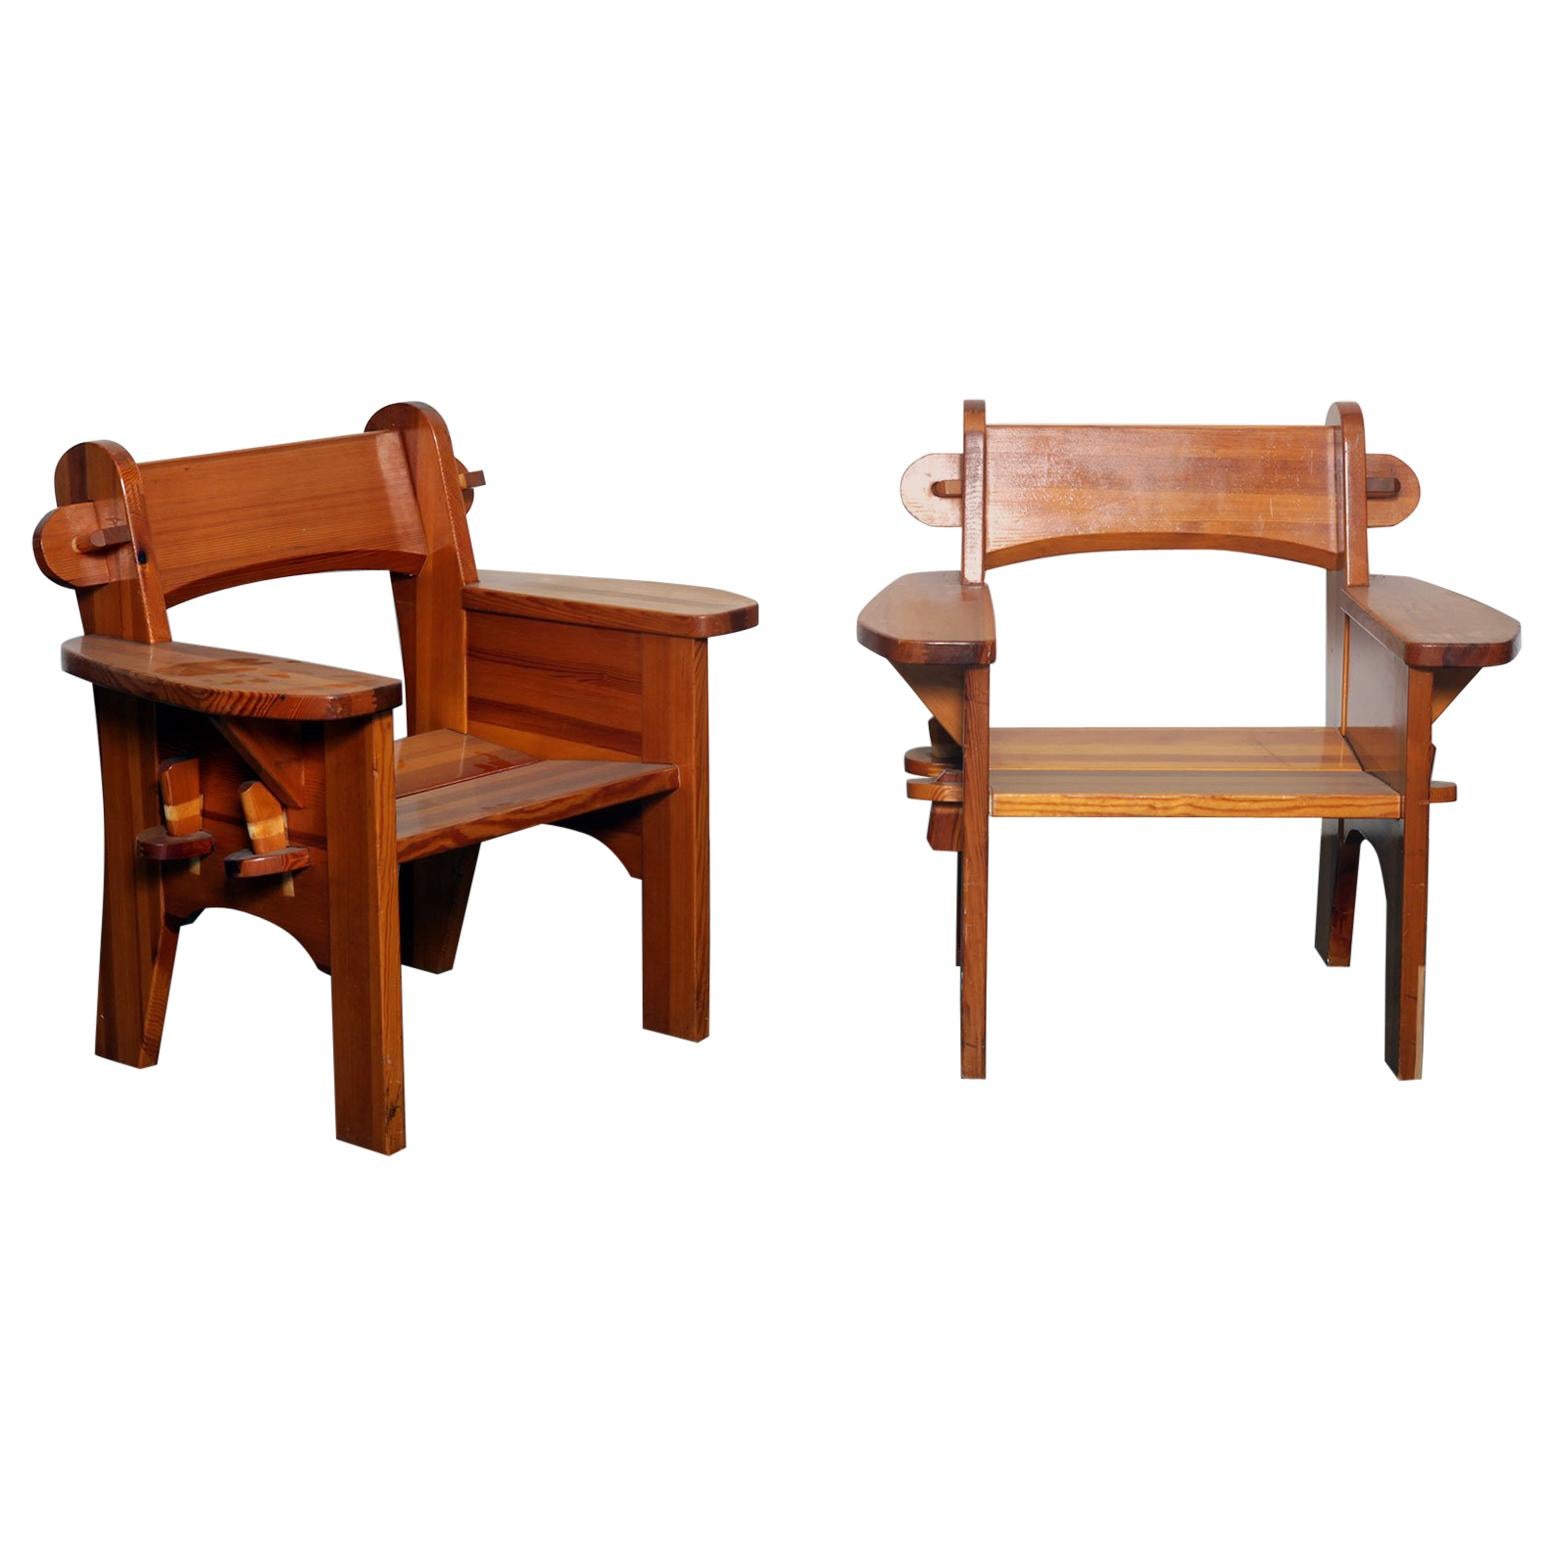 Pair of Solid Pine 'Berga' Chairs by David Rosen for Nordiska Kompaniet, Sweden For Sale